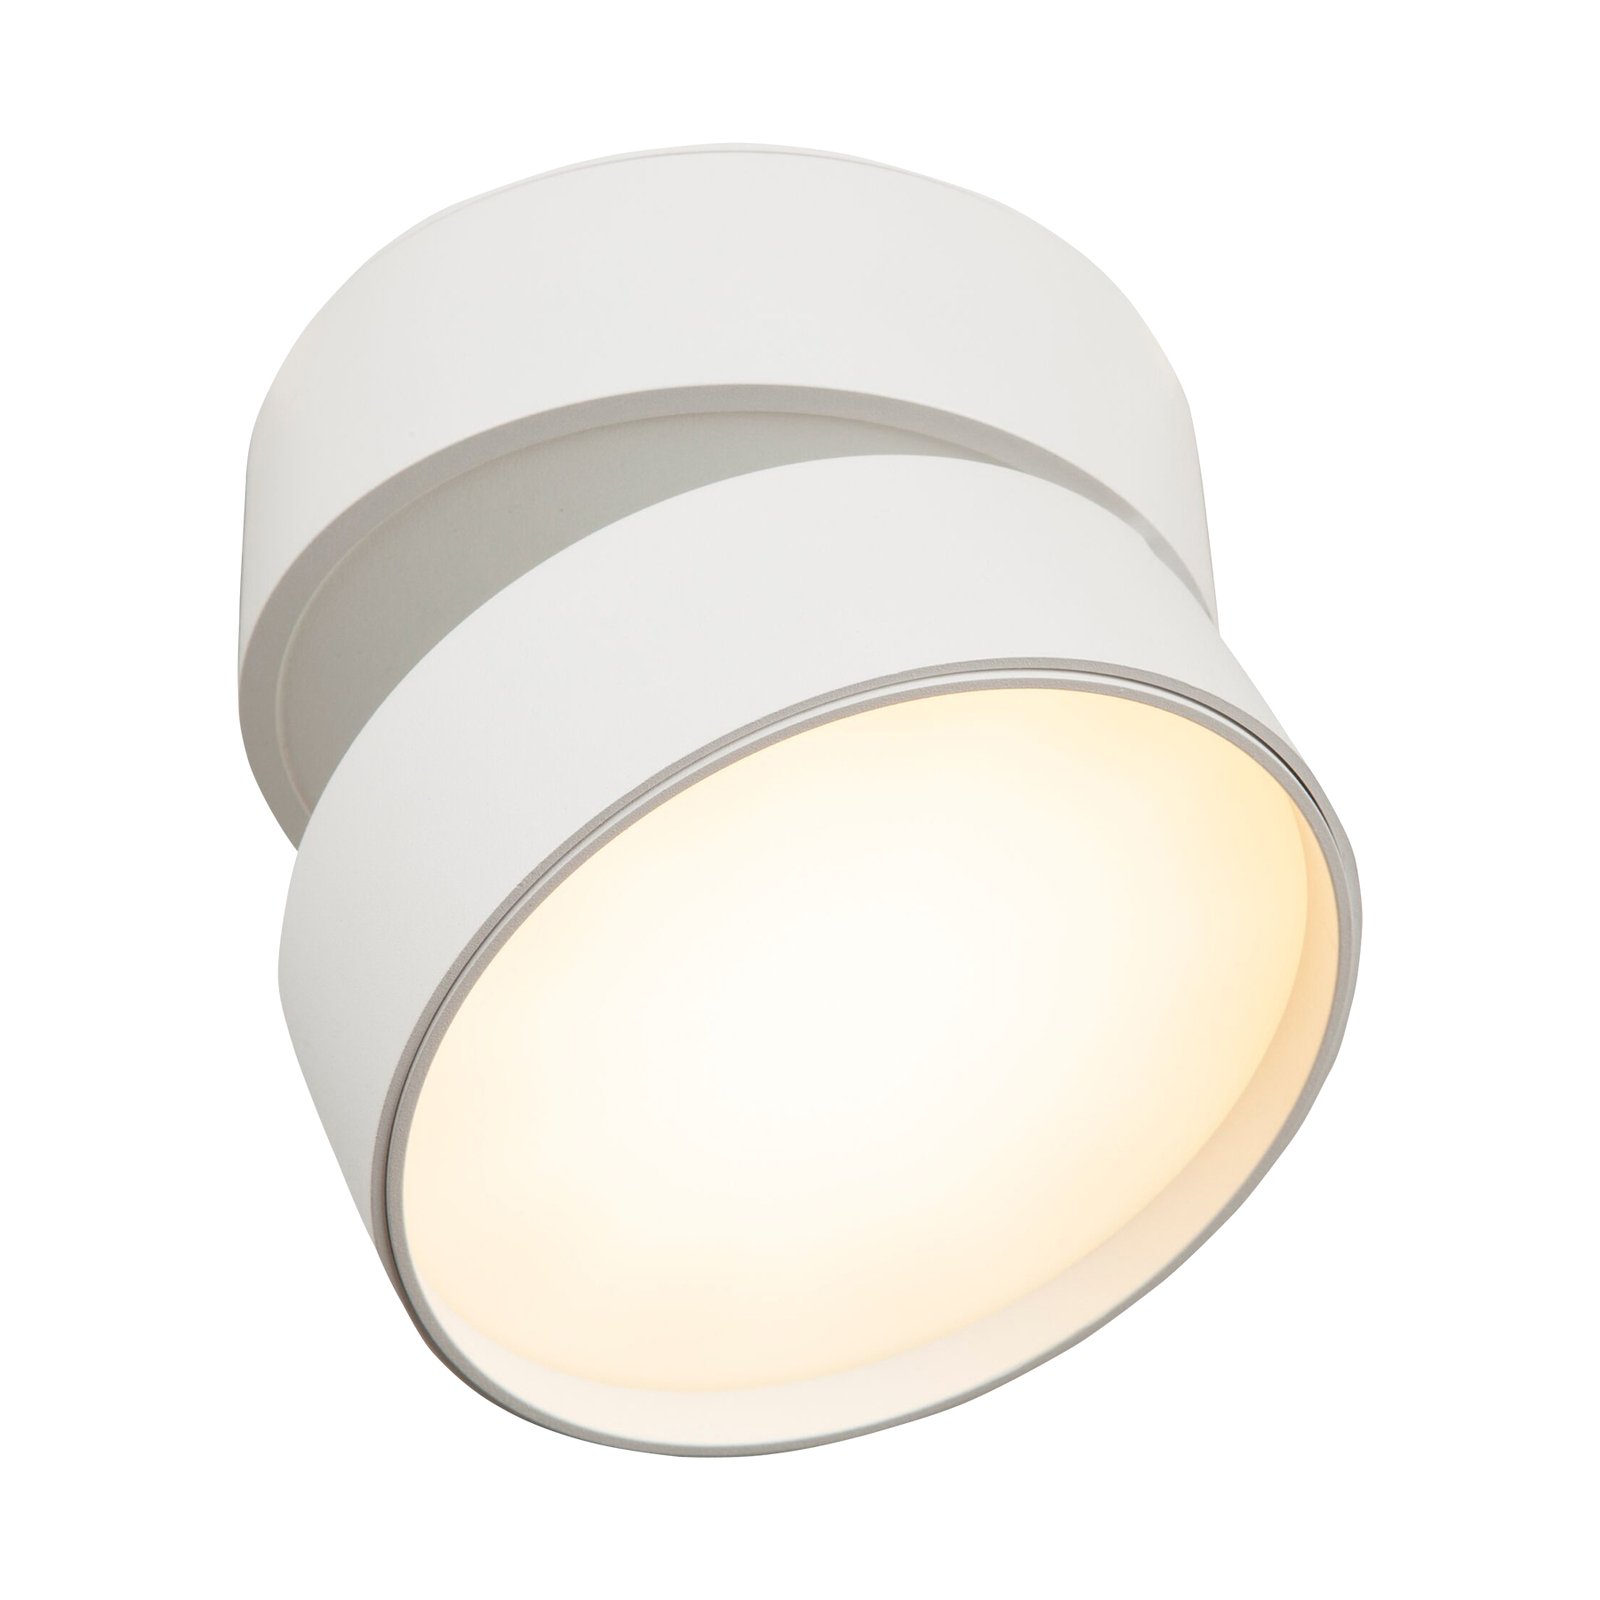 Maytoni Onda plafonnier LED, 3 000 K, 19 W, blanc